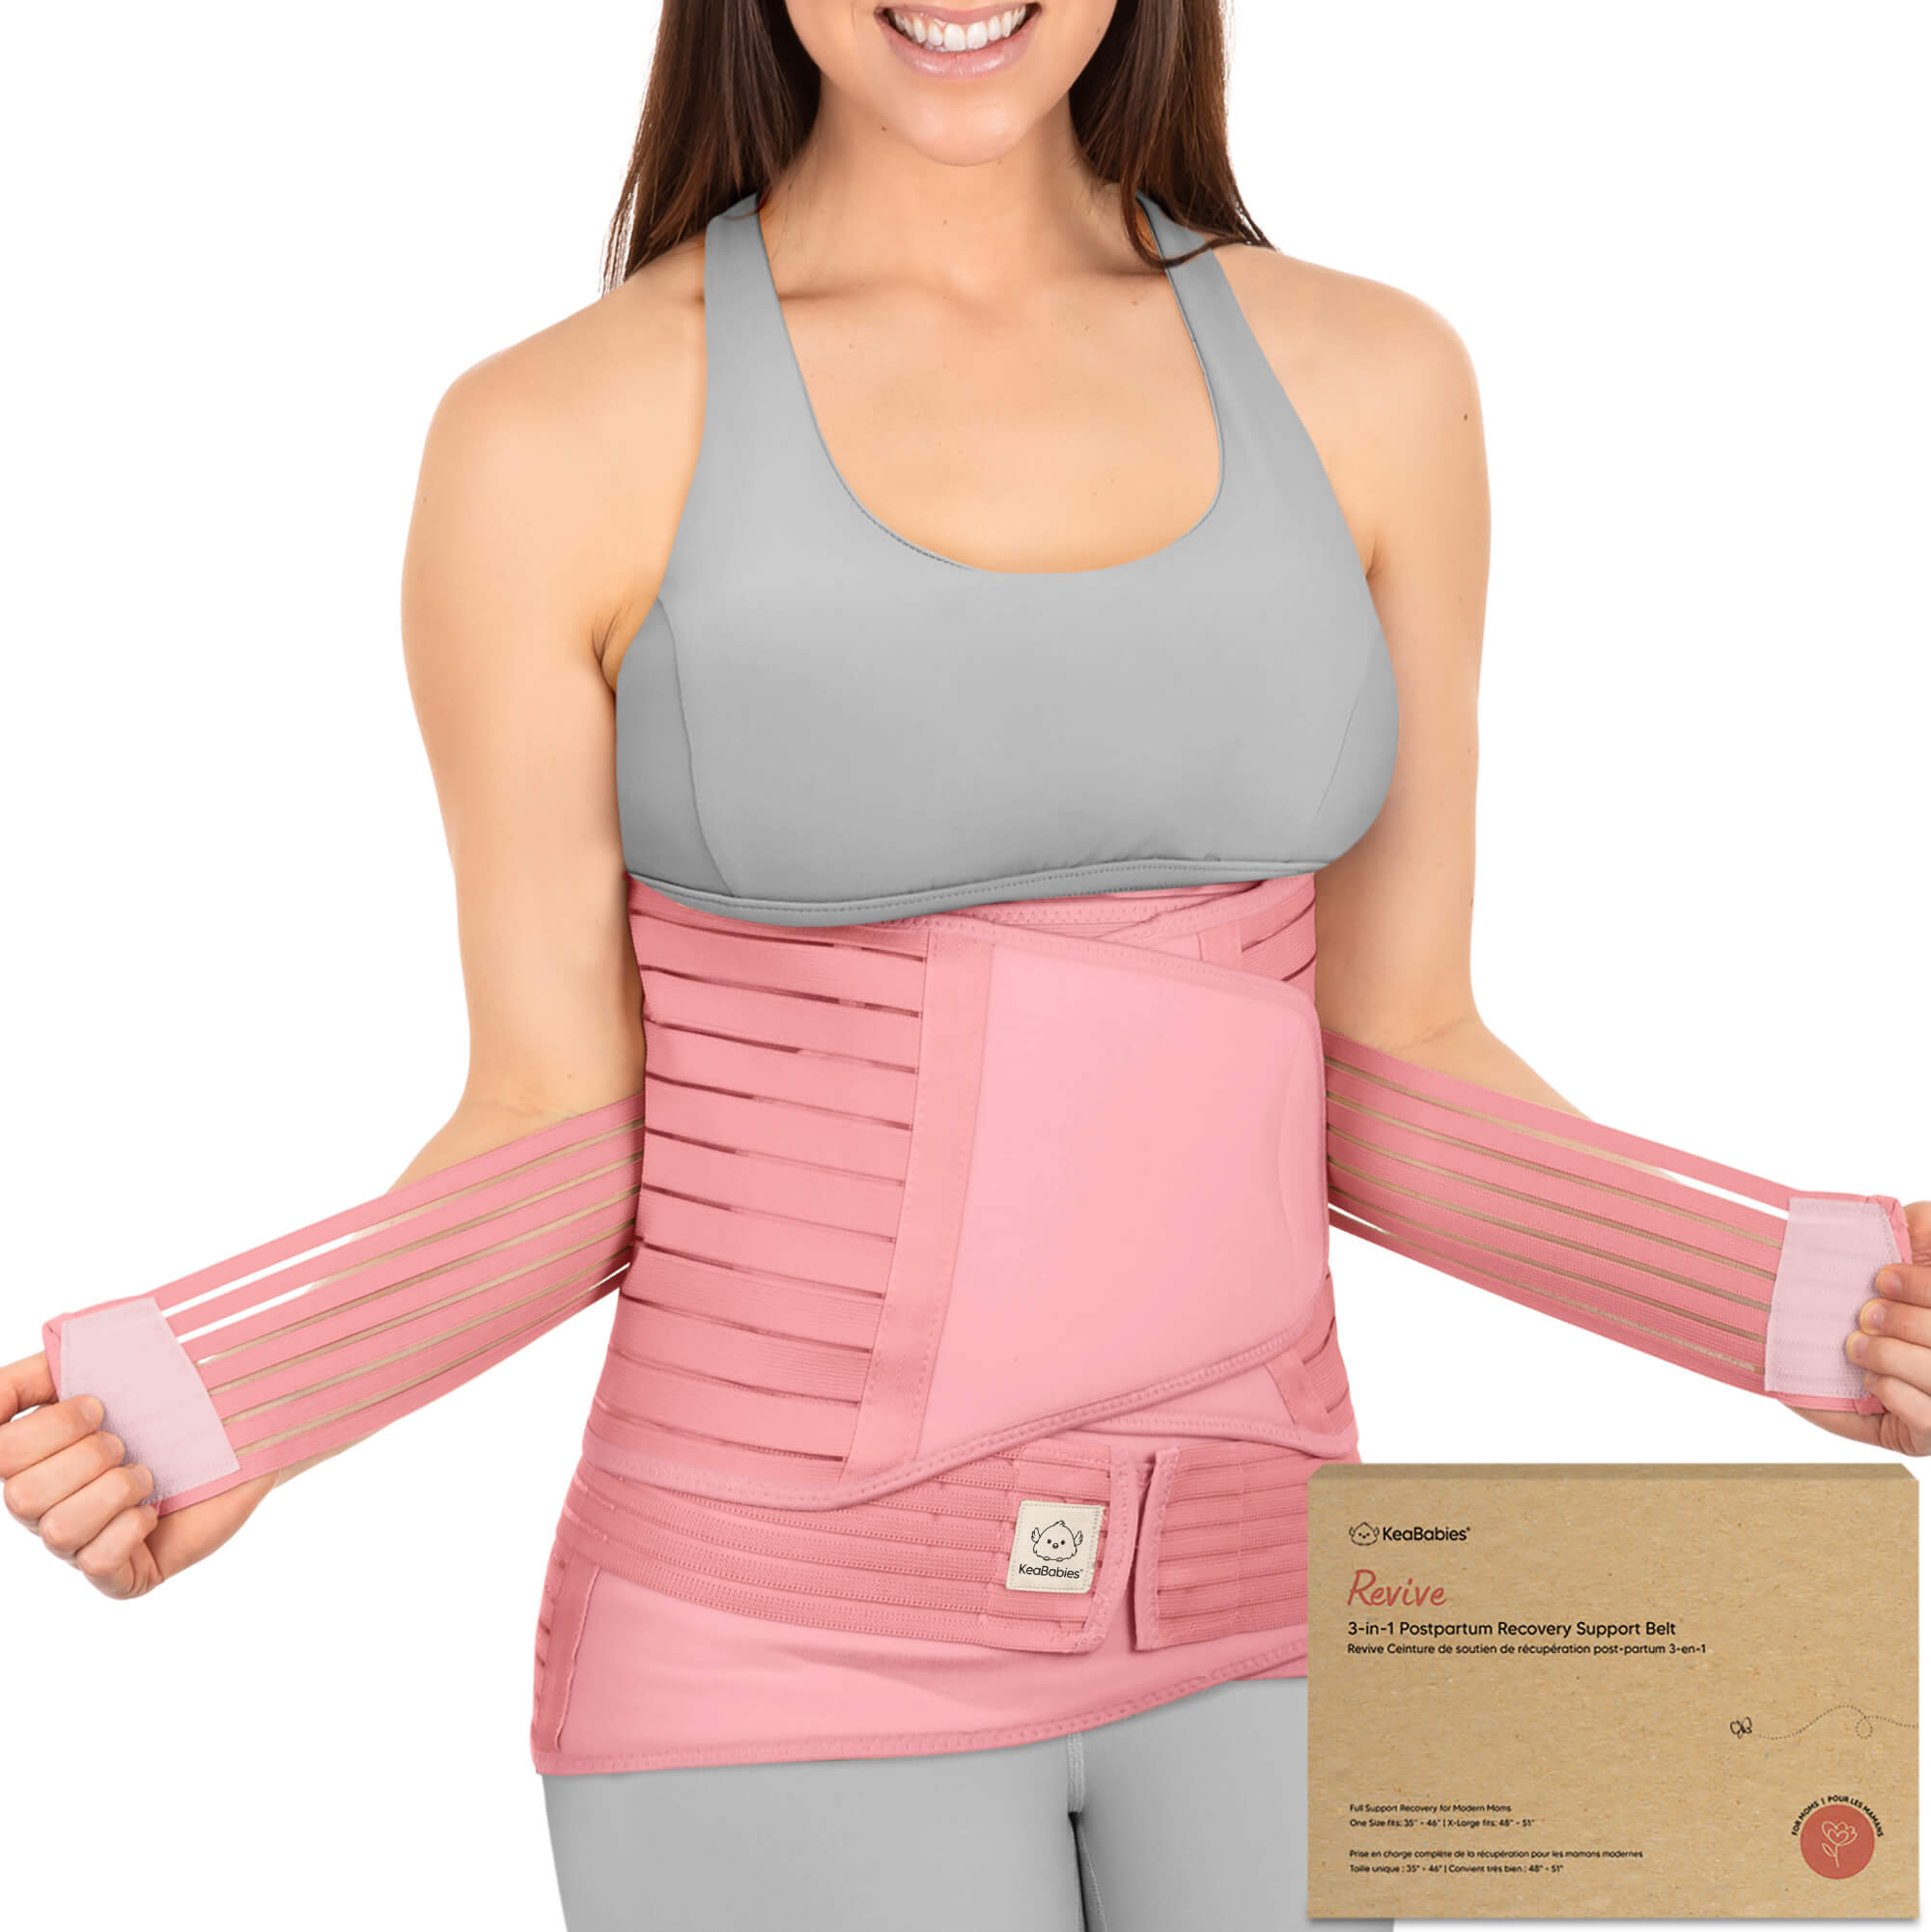 Postpartum belly binding. : r/corsets